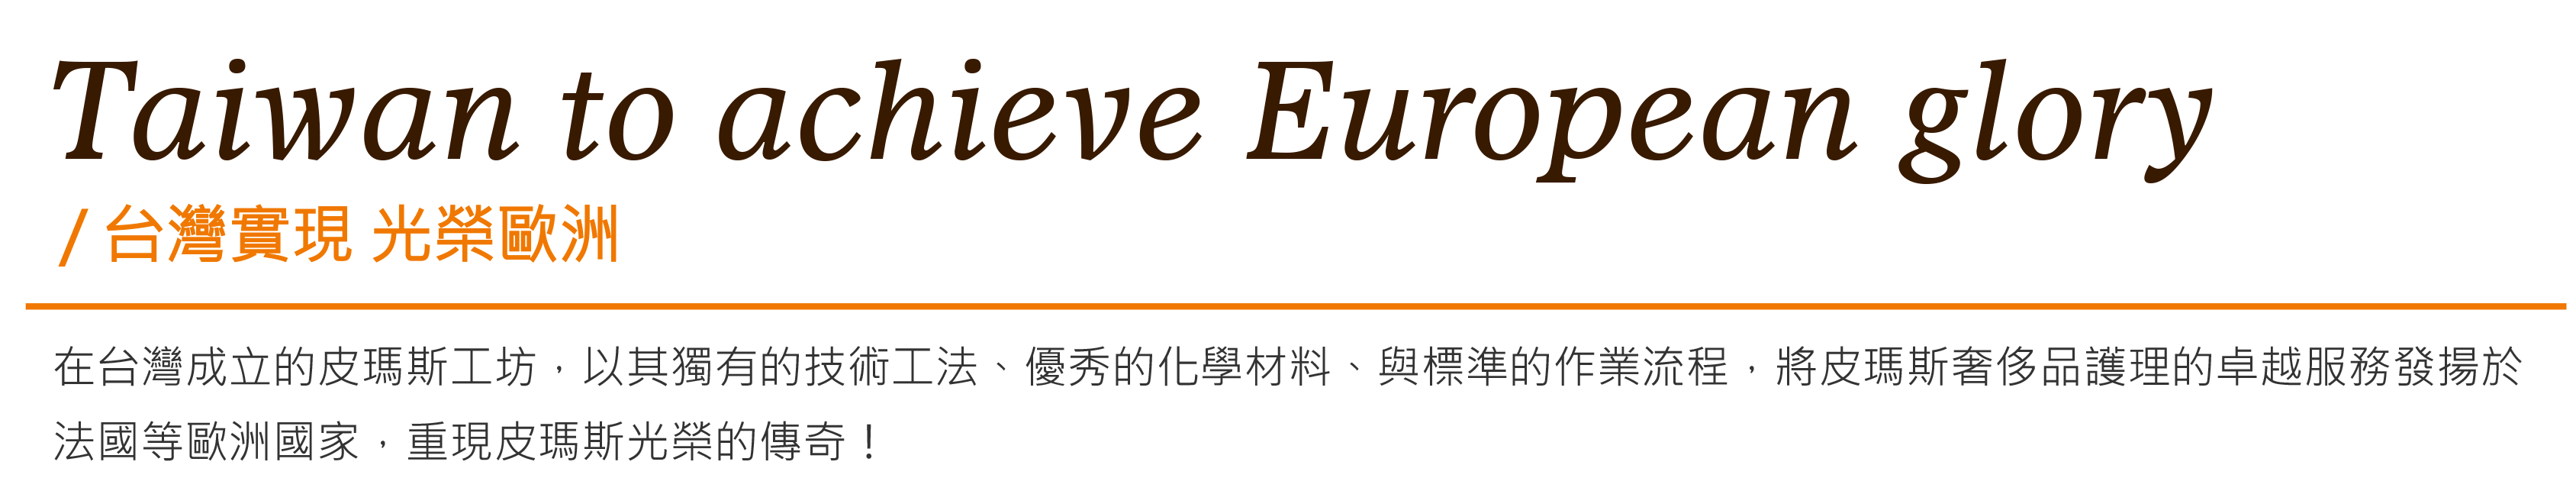 Taiwan to achieve European glory台灣實現 光榮歐洲-在台灣成立的皮瑪斯工坊，以其獨有的技術工法、優秀的化學材料、與標準的作業流程，將皮瑪斯奢侈品護理的卓越服務發揚於法國等歐洲國家，重現皮瑪斯光榮的傳奇！